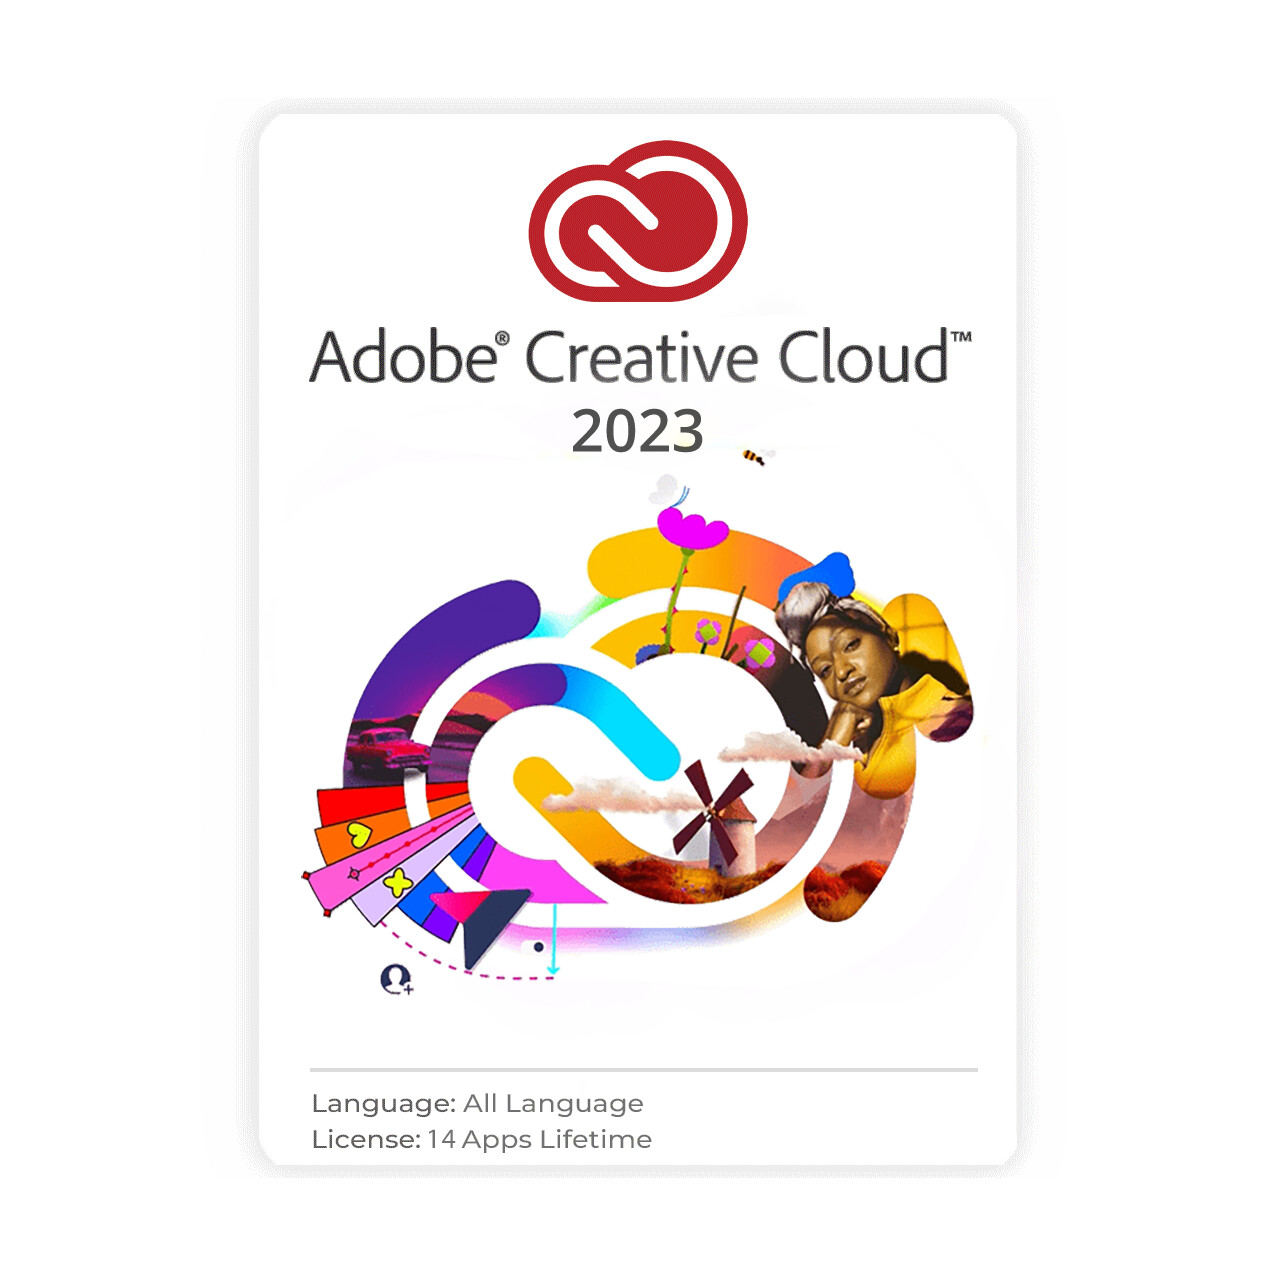 Adobe Creative Cloud 2023 for Windows